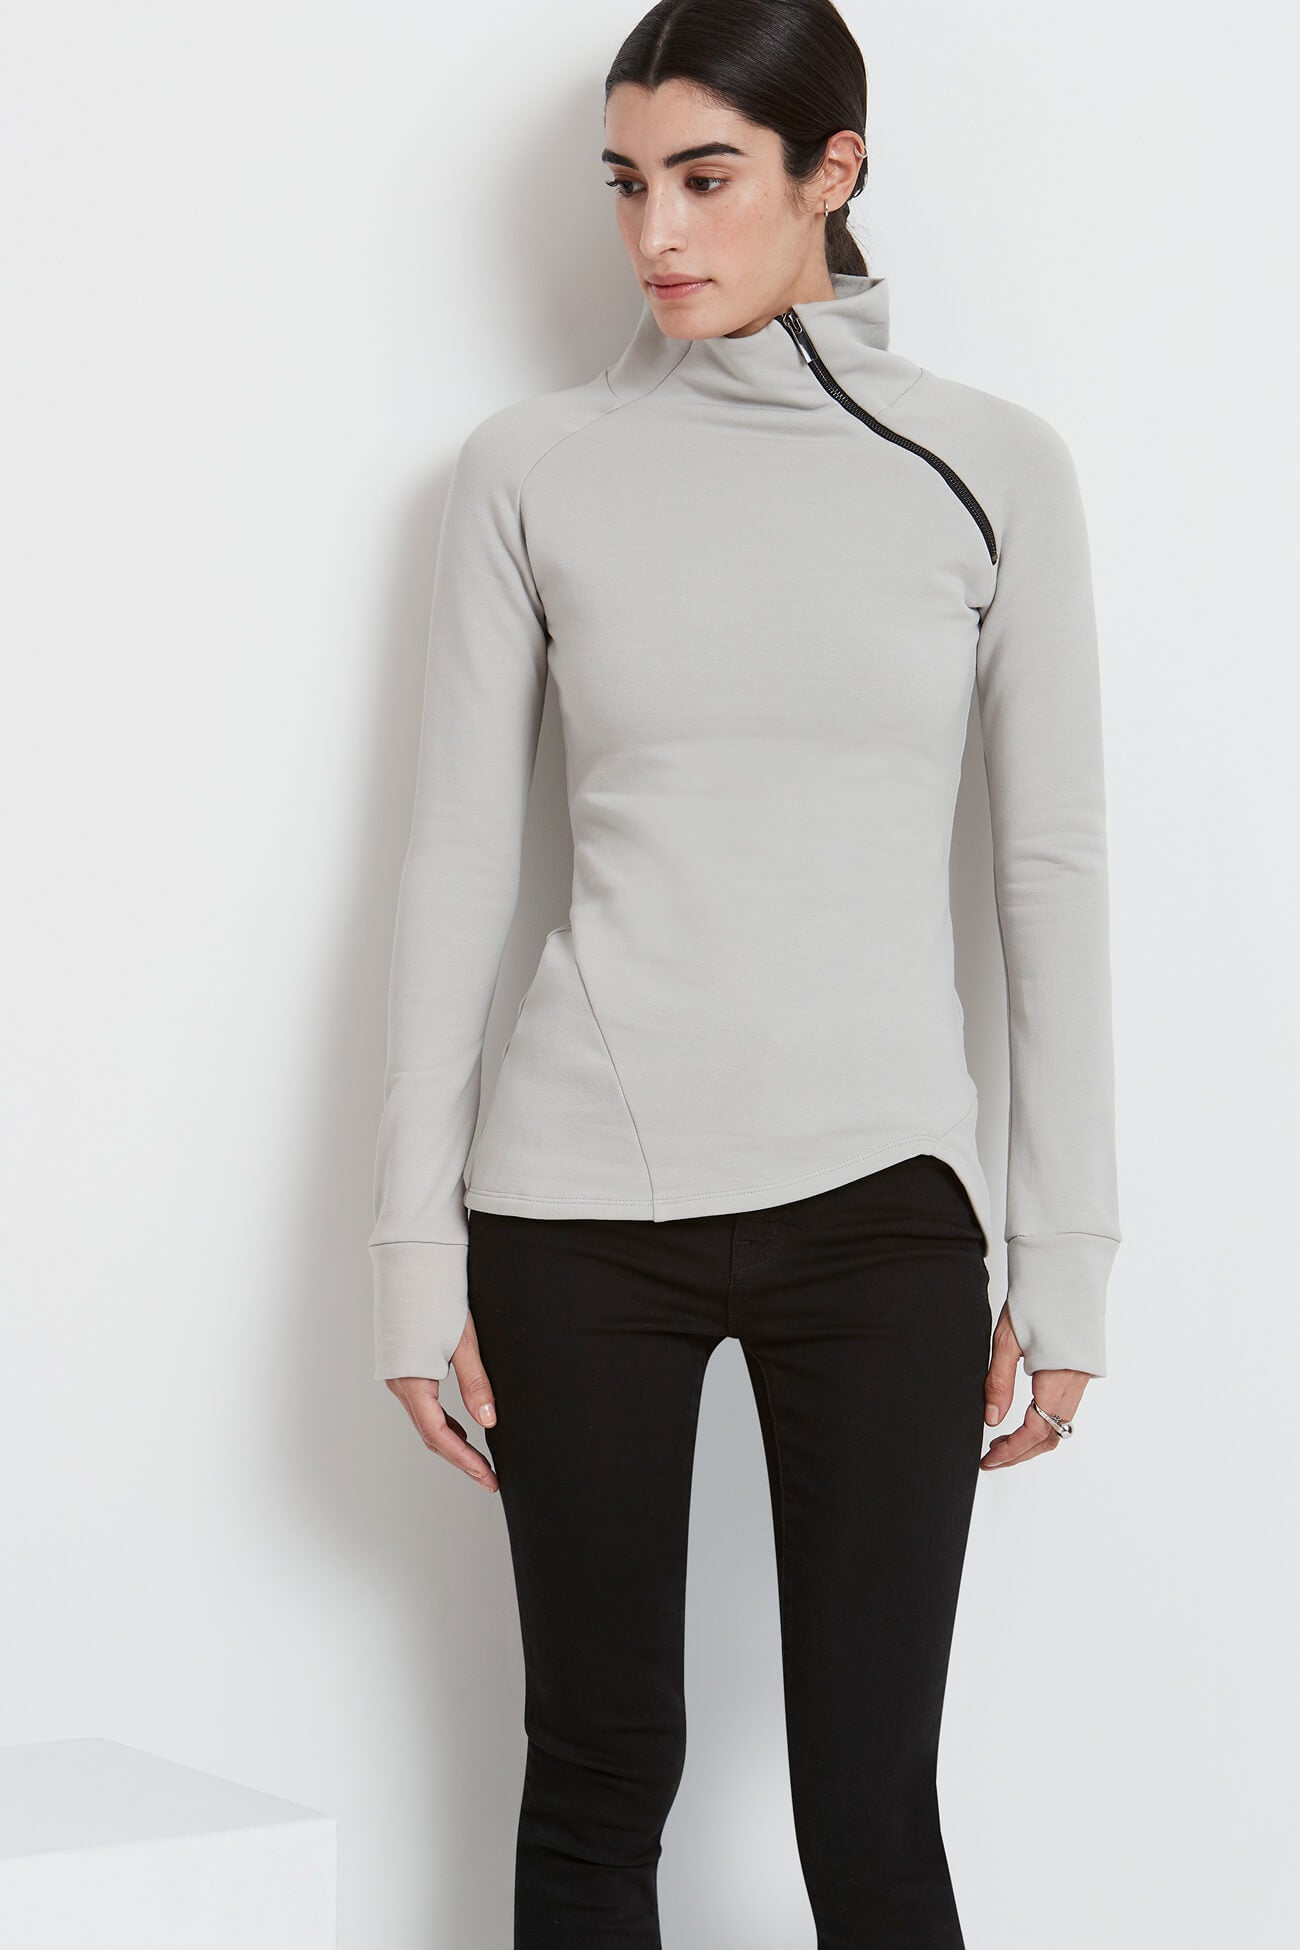 Sleek Grey Loungewear - Brie Sweatshirt | Marcella